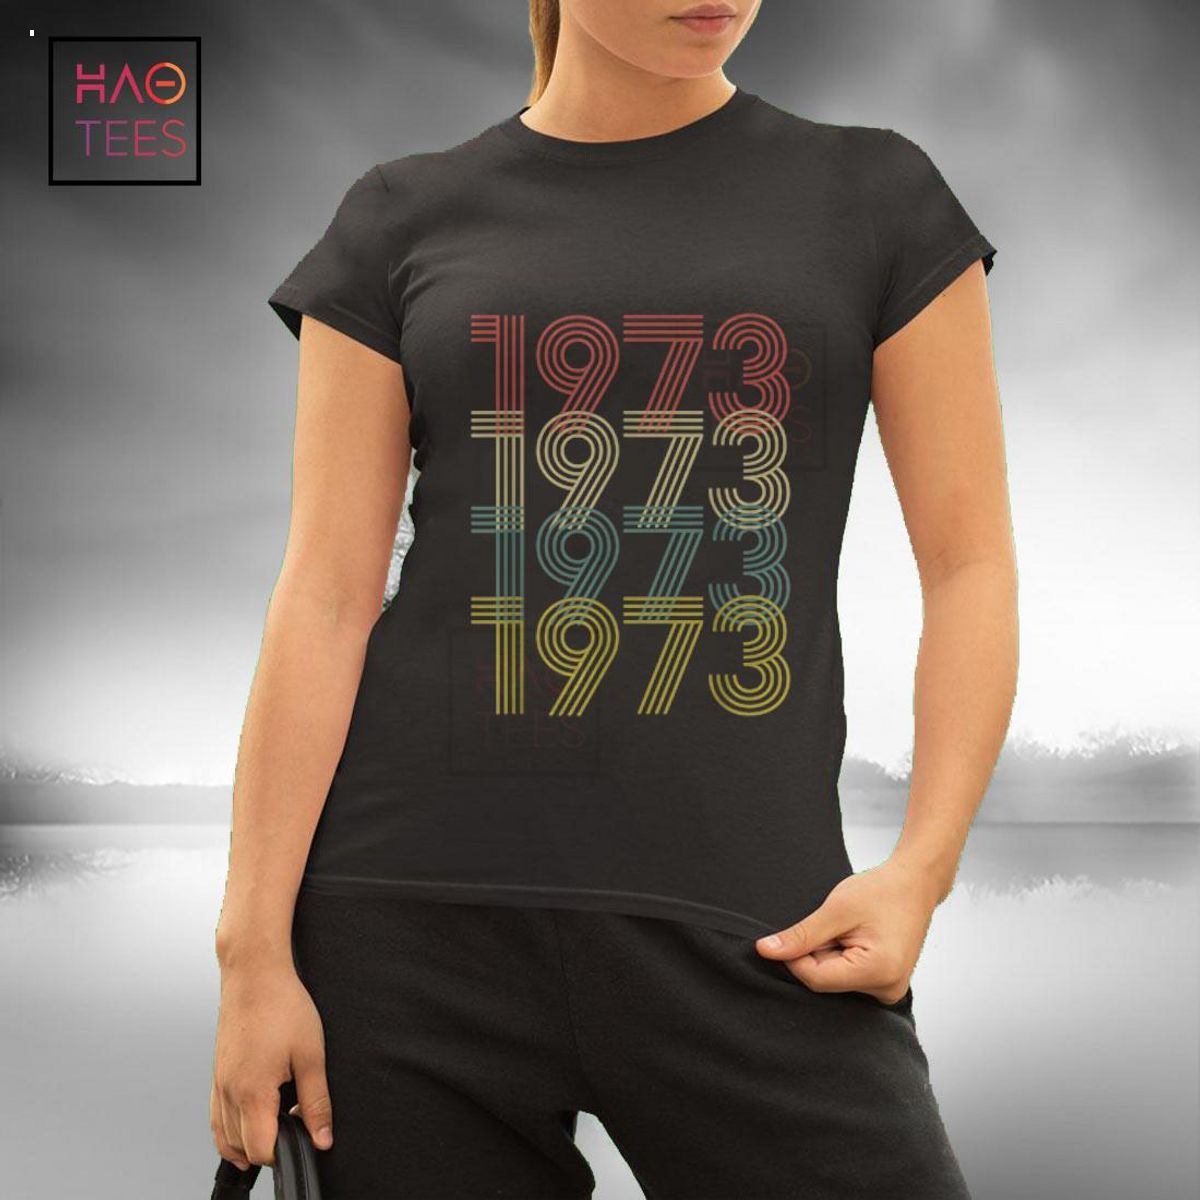 Retro Pro Roe 1973 Pro Choice Feminist Women's Rights Shirt